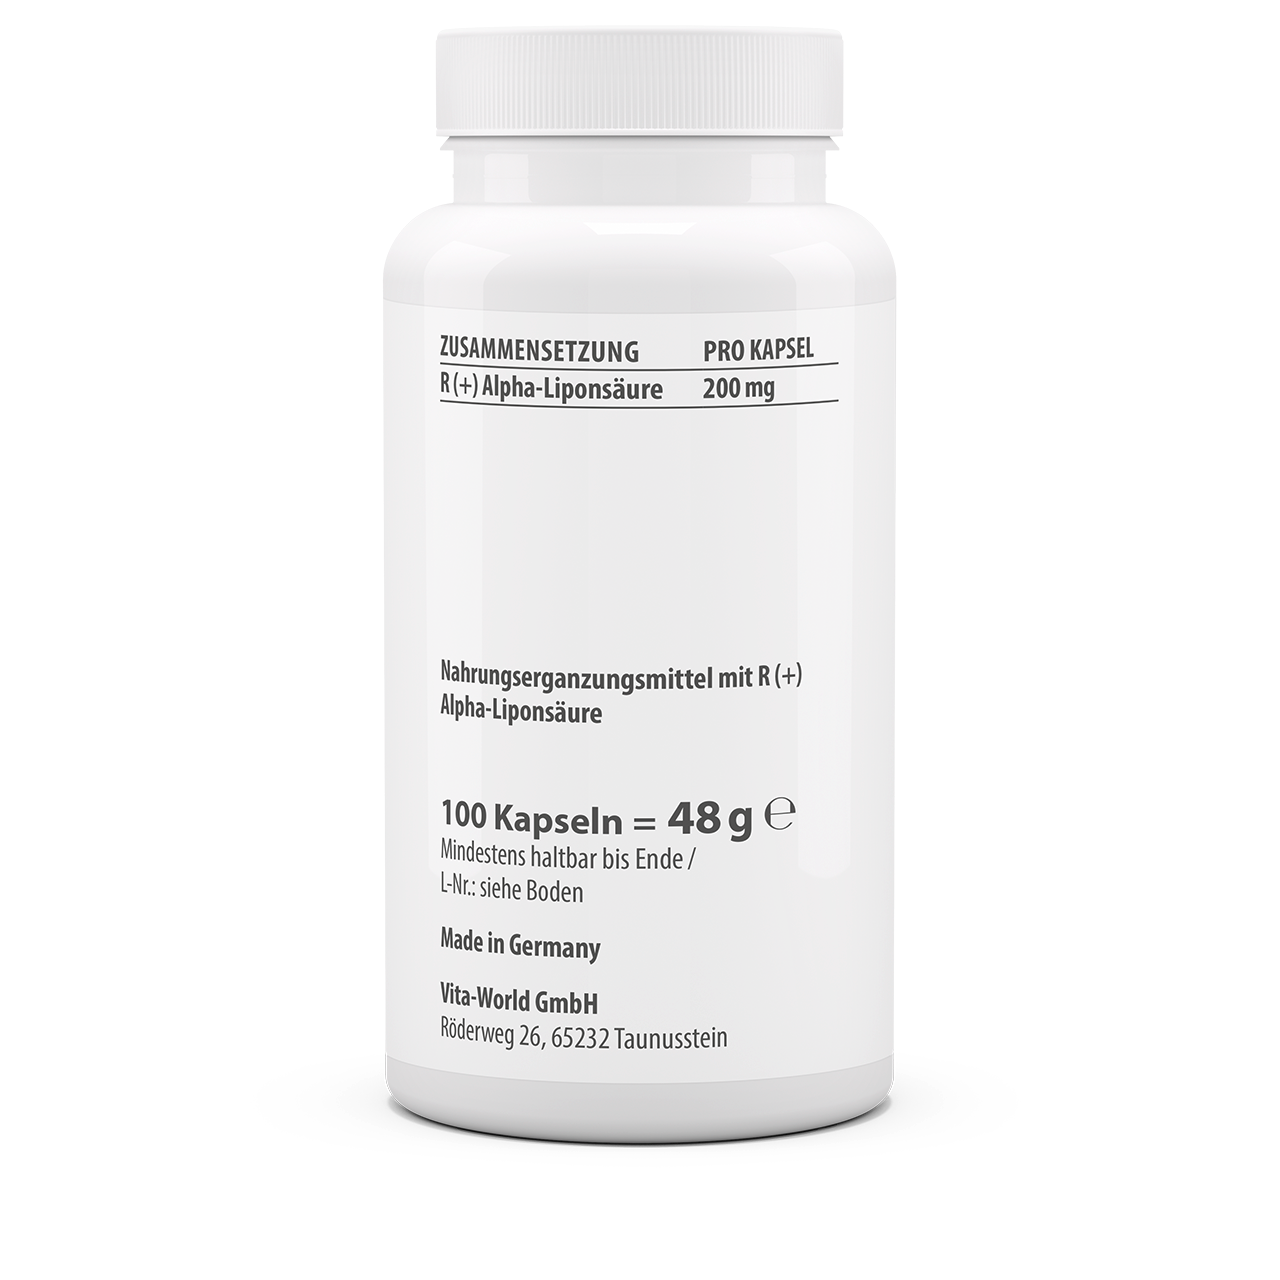 R (+) Alpha-Liponsäure 200 mg (100 Kps)